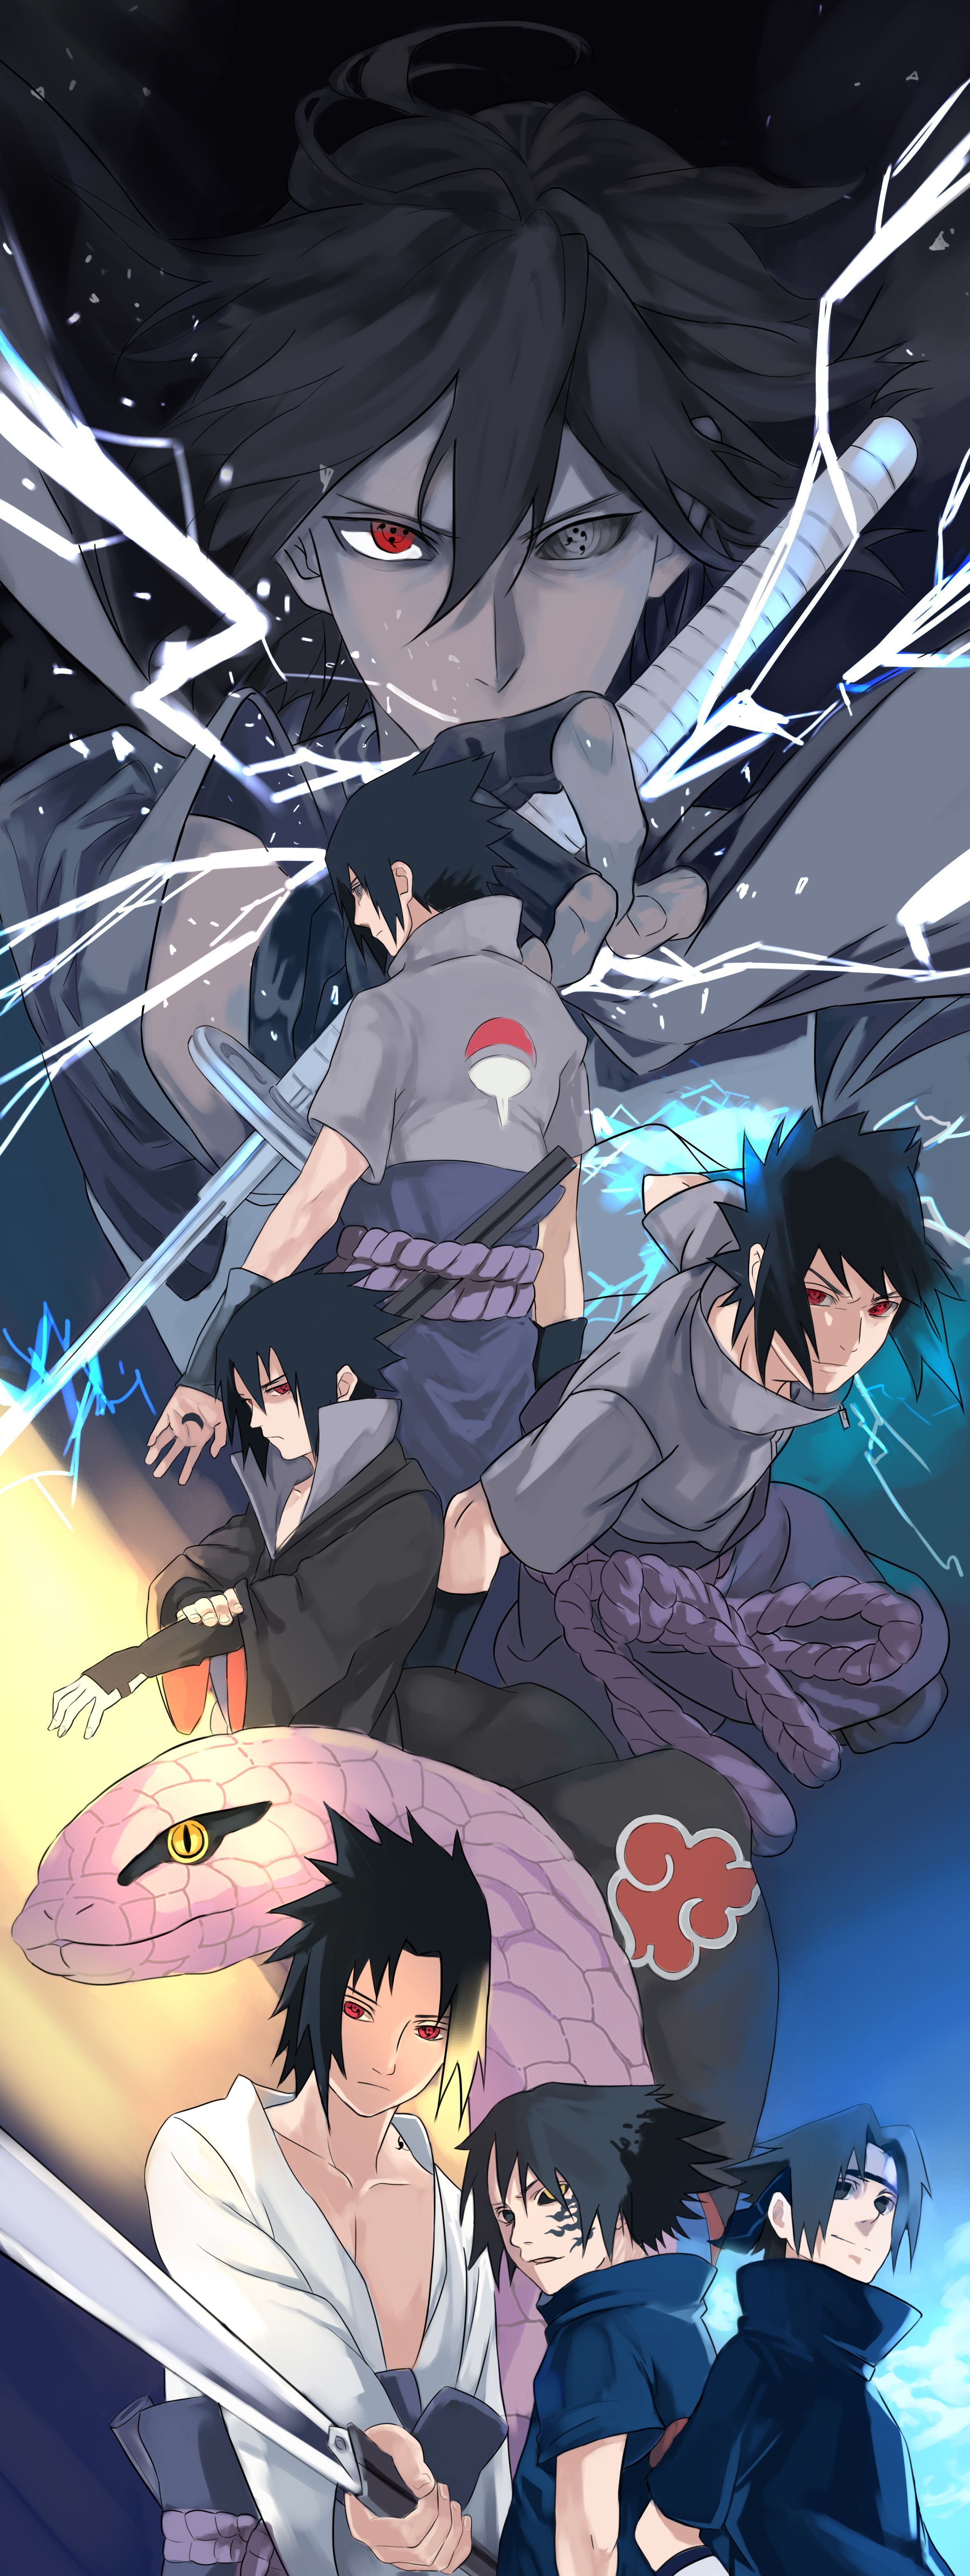 A group of people holding swords in the dark - Sasuke Uchiha